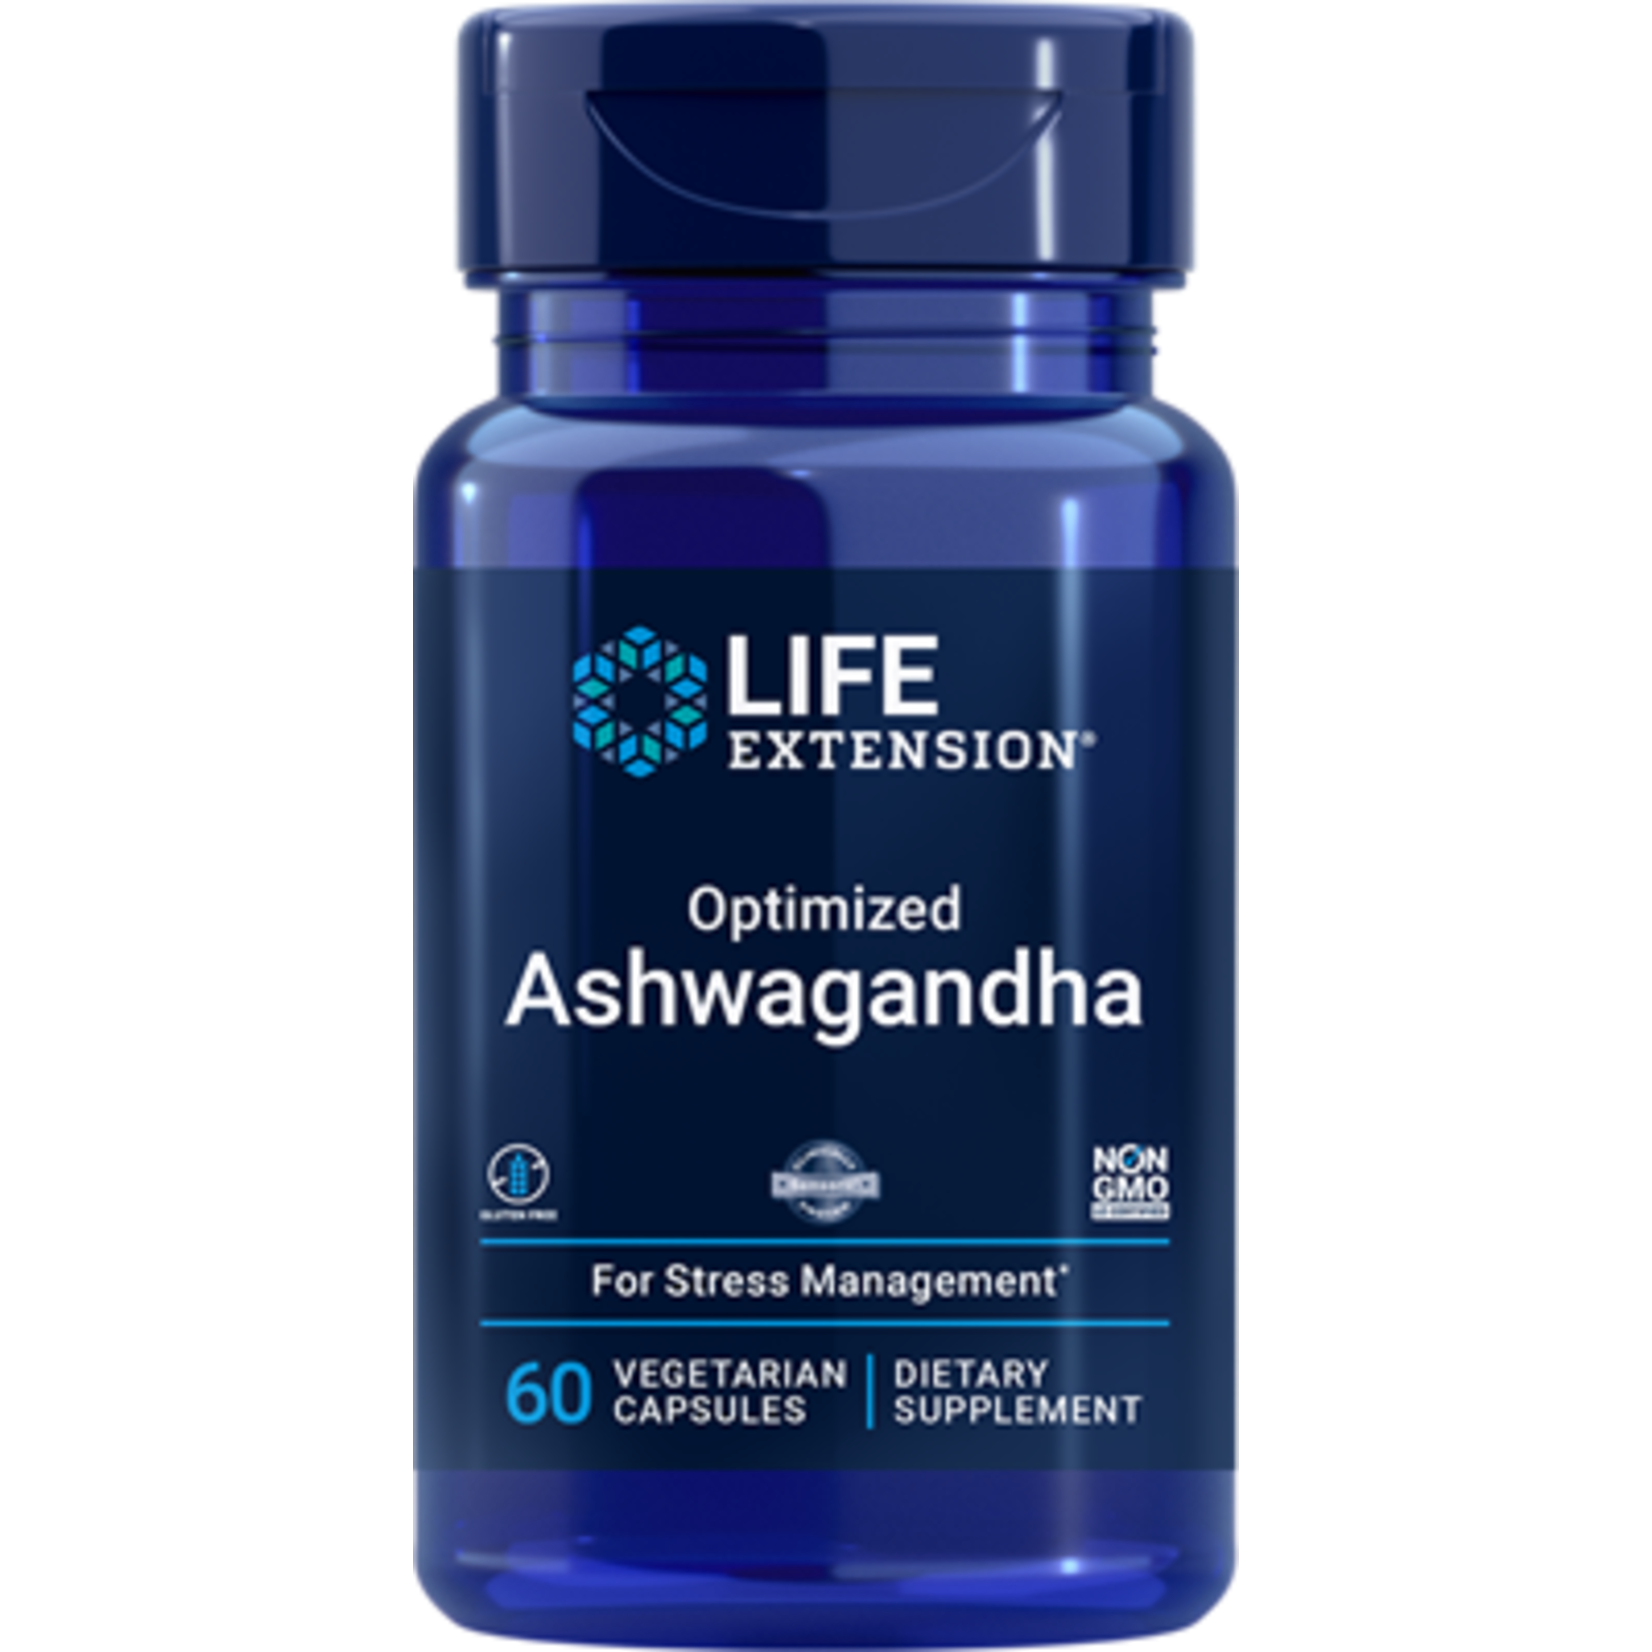 Life Extension Life Extension - Optimized Ashwagandha Extract - 60 Veg Capsules